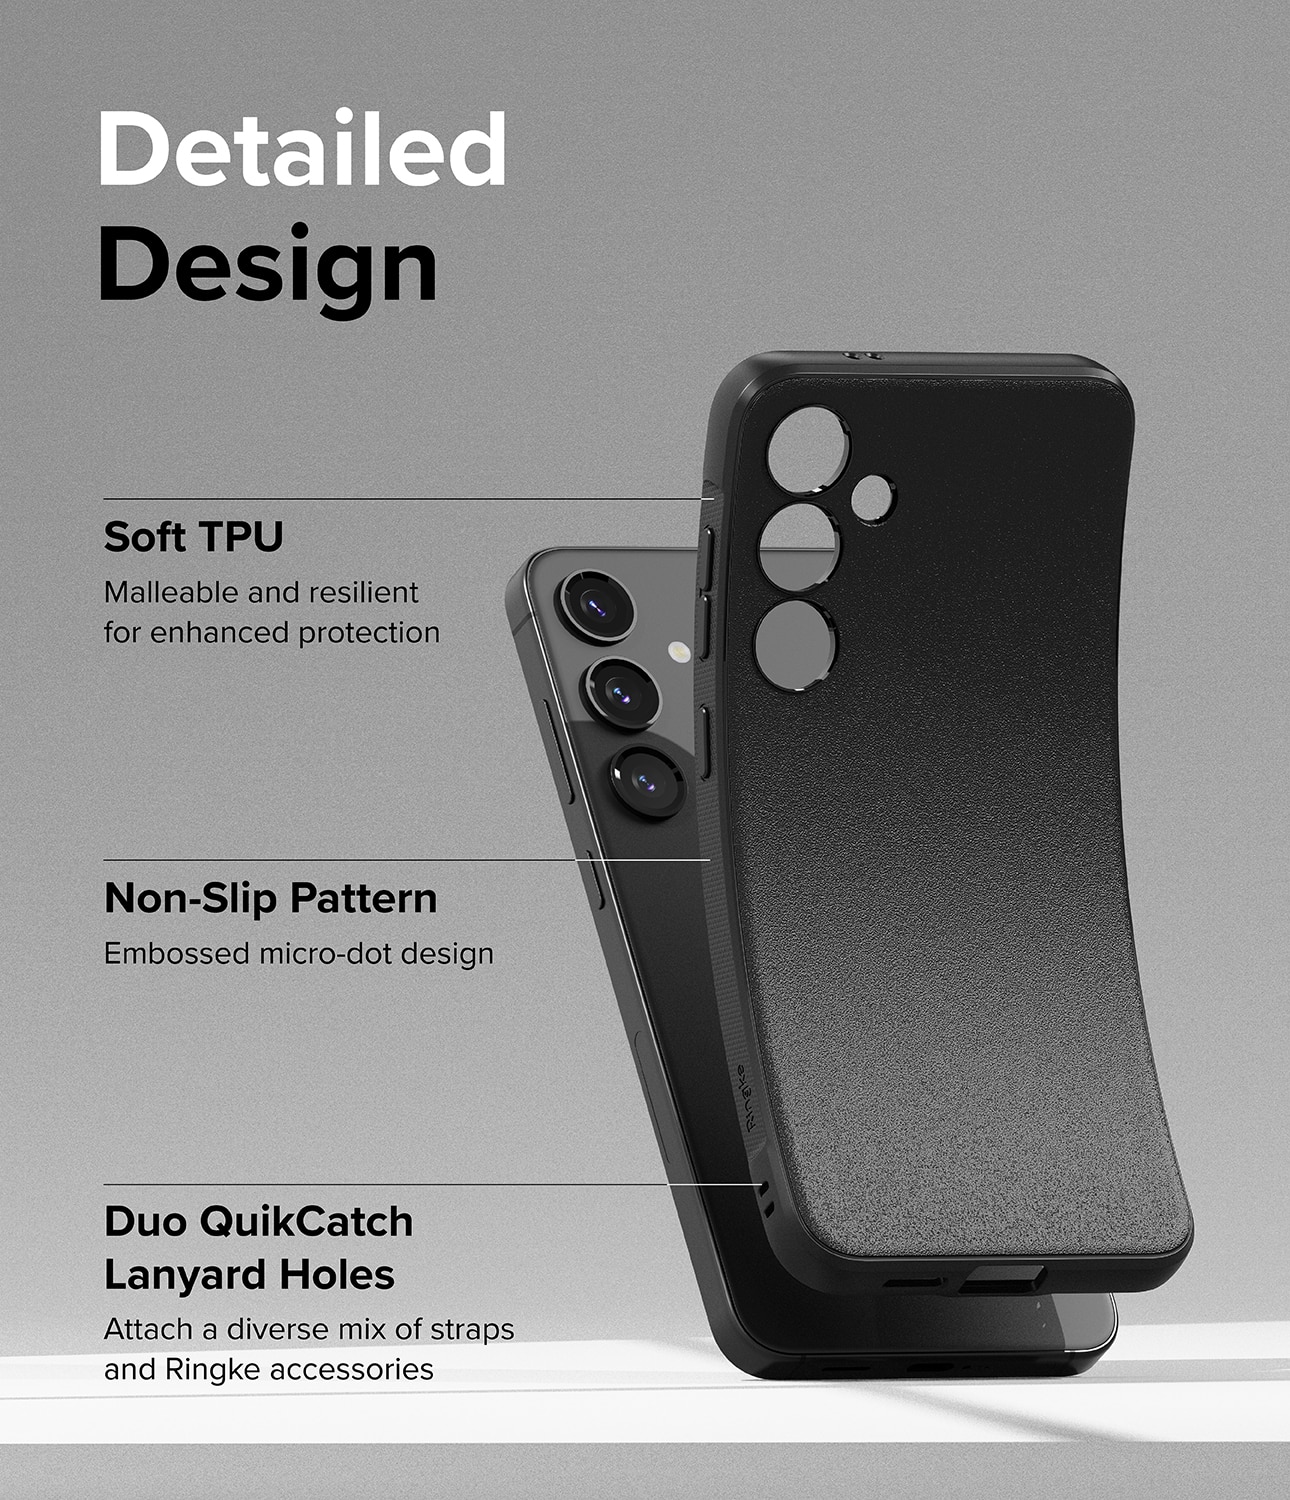 Onyx Case Samsung Galaxy S24 svart